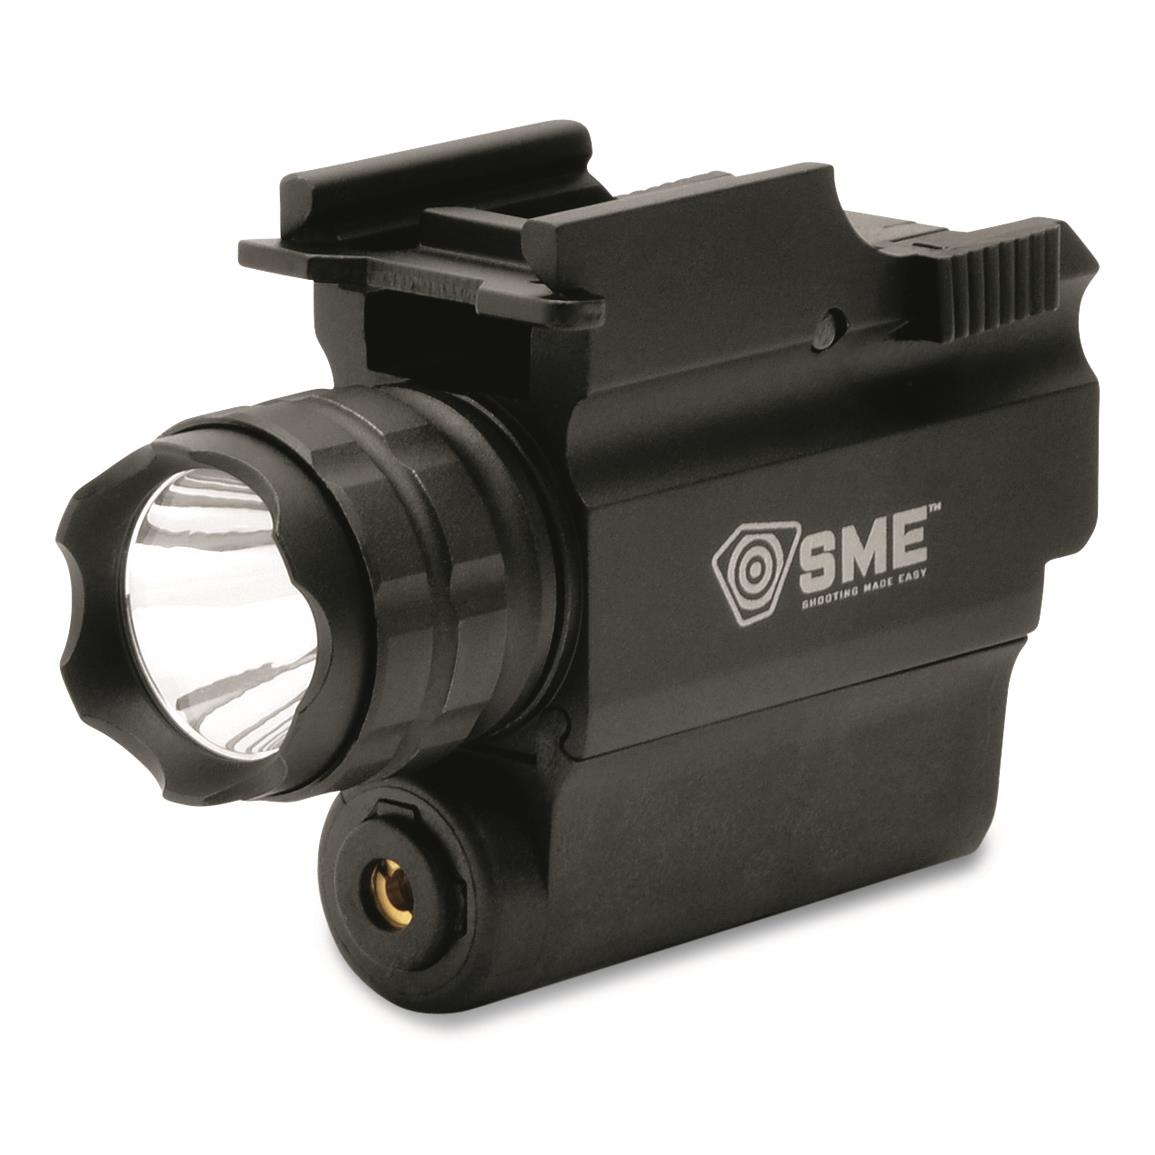 SME Compact Tactical Handgun LED Light/Laser Combo